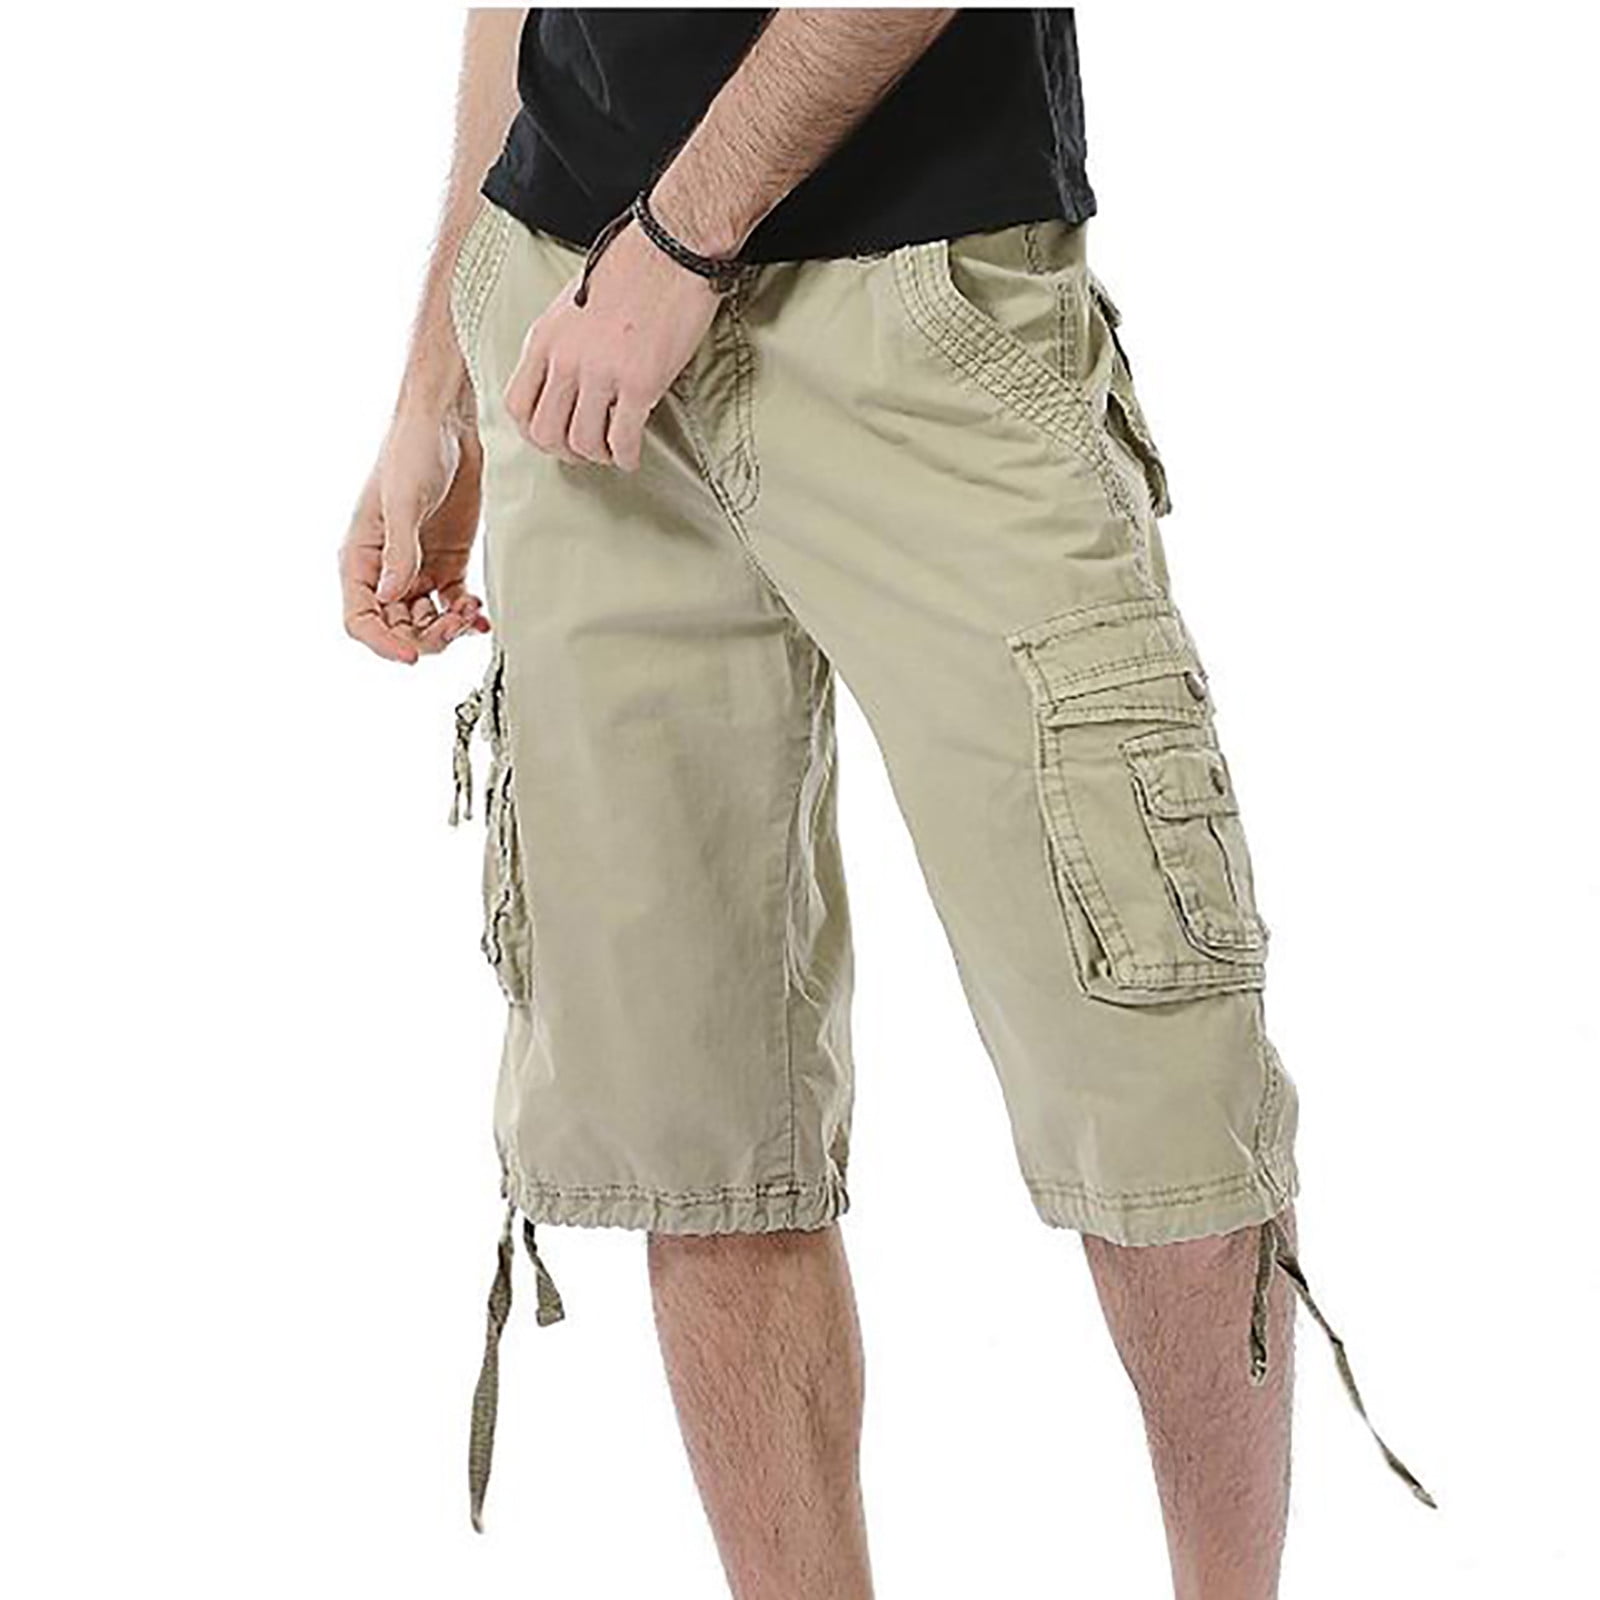 Simplmasygenix Mens Shorts Plus Size Clearance Men's Shorts Multi ...